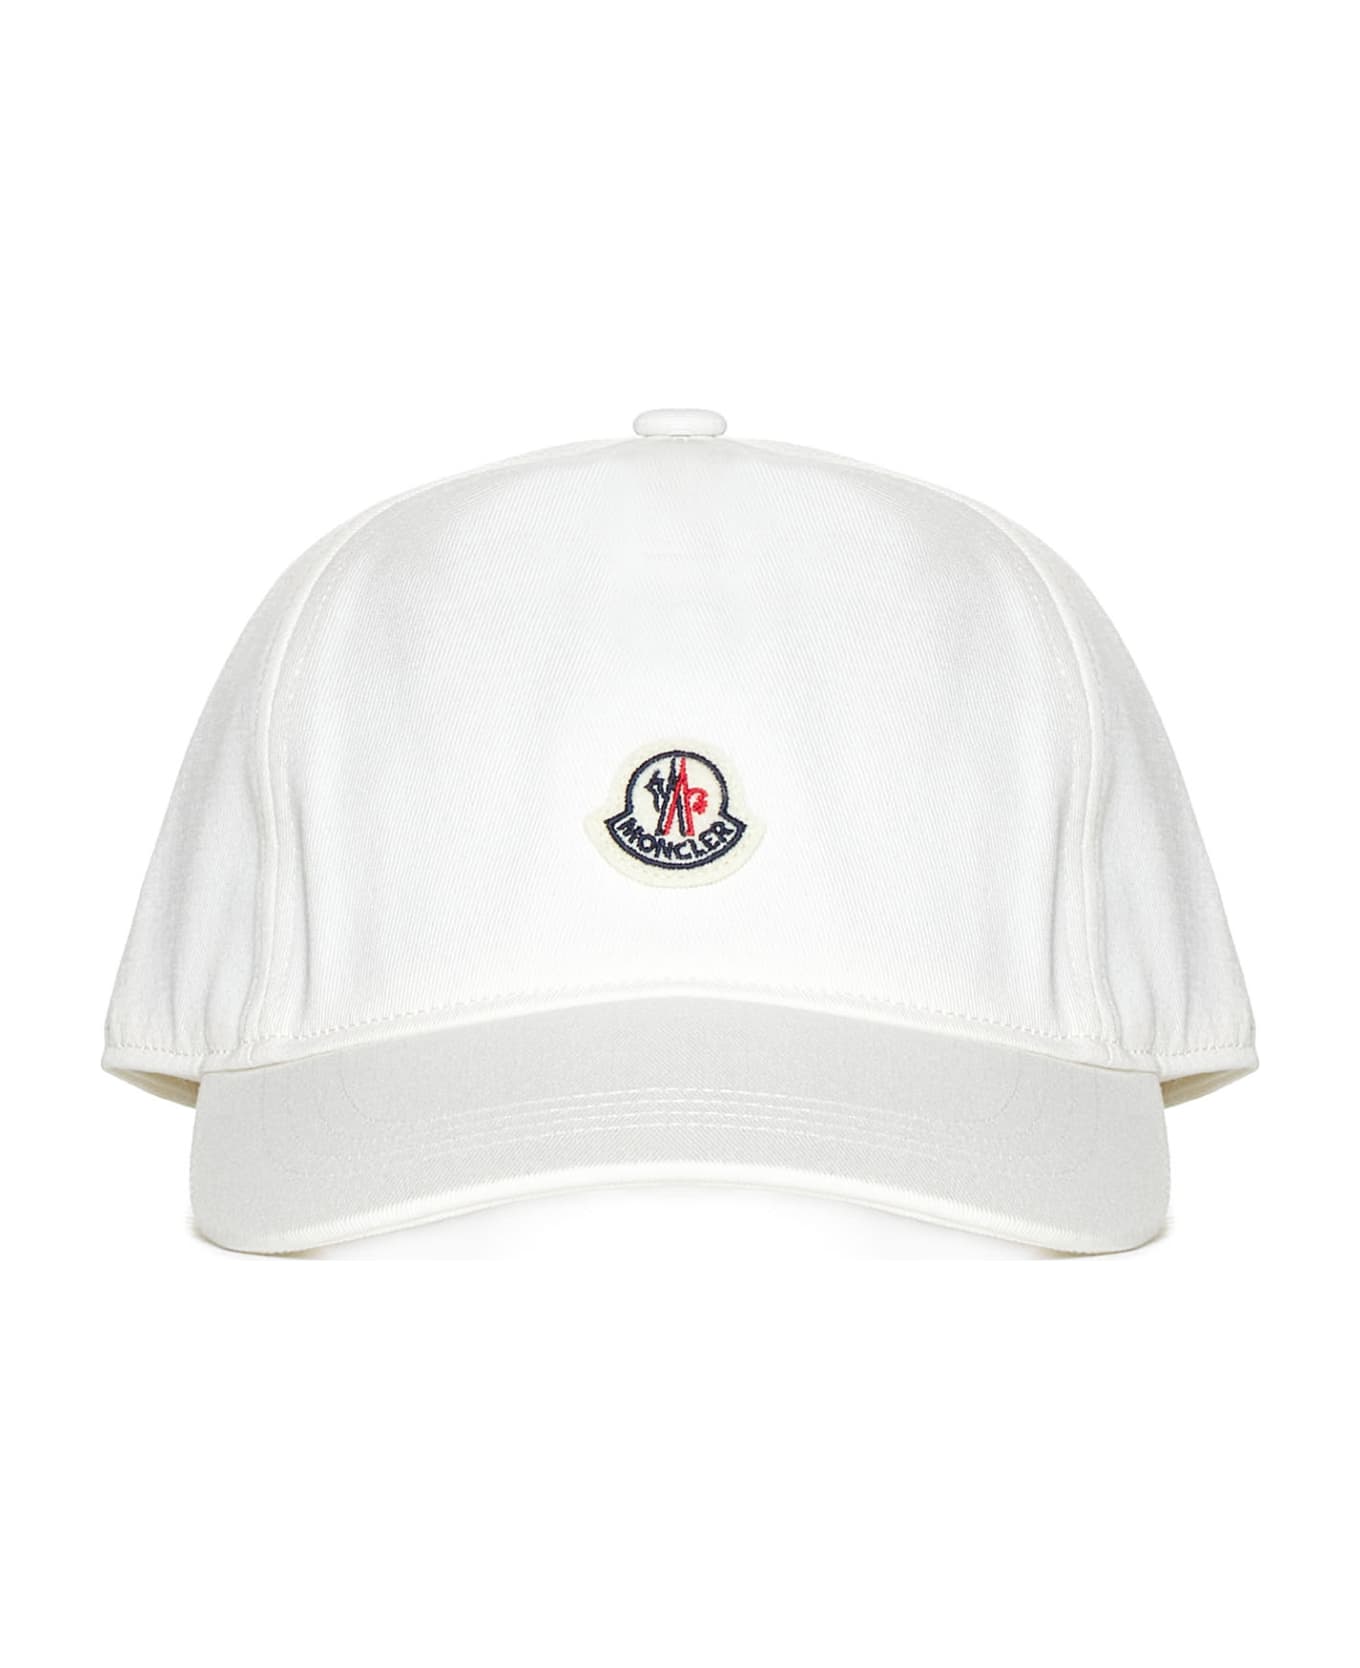 Moncler Hat - Bianco